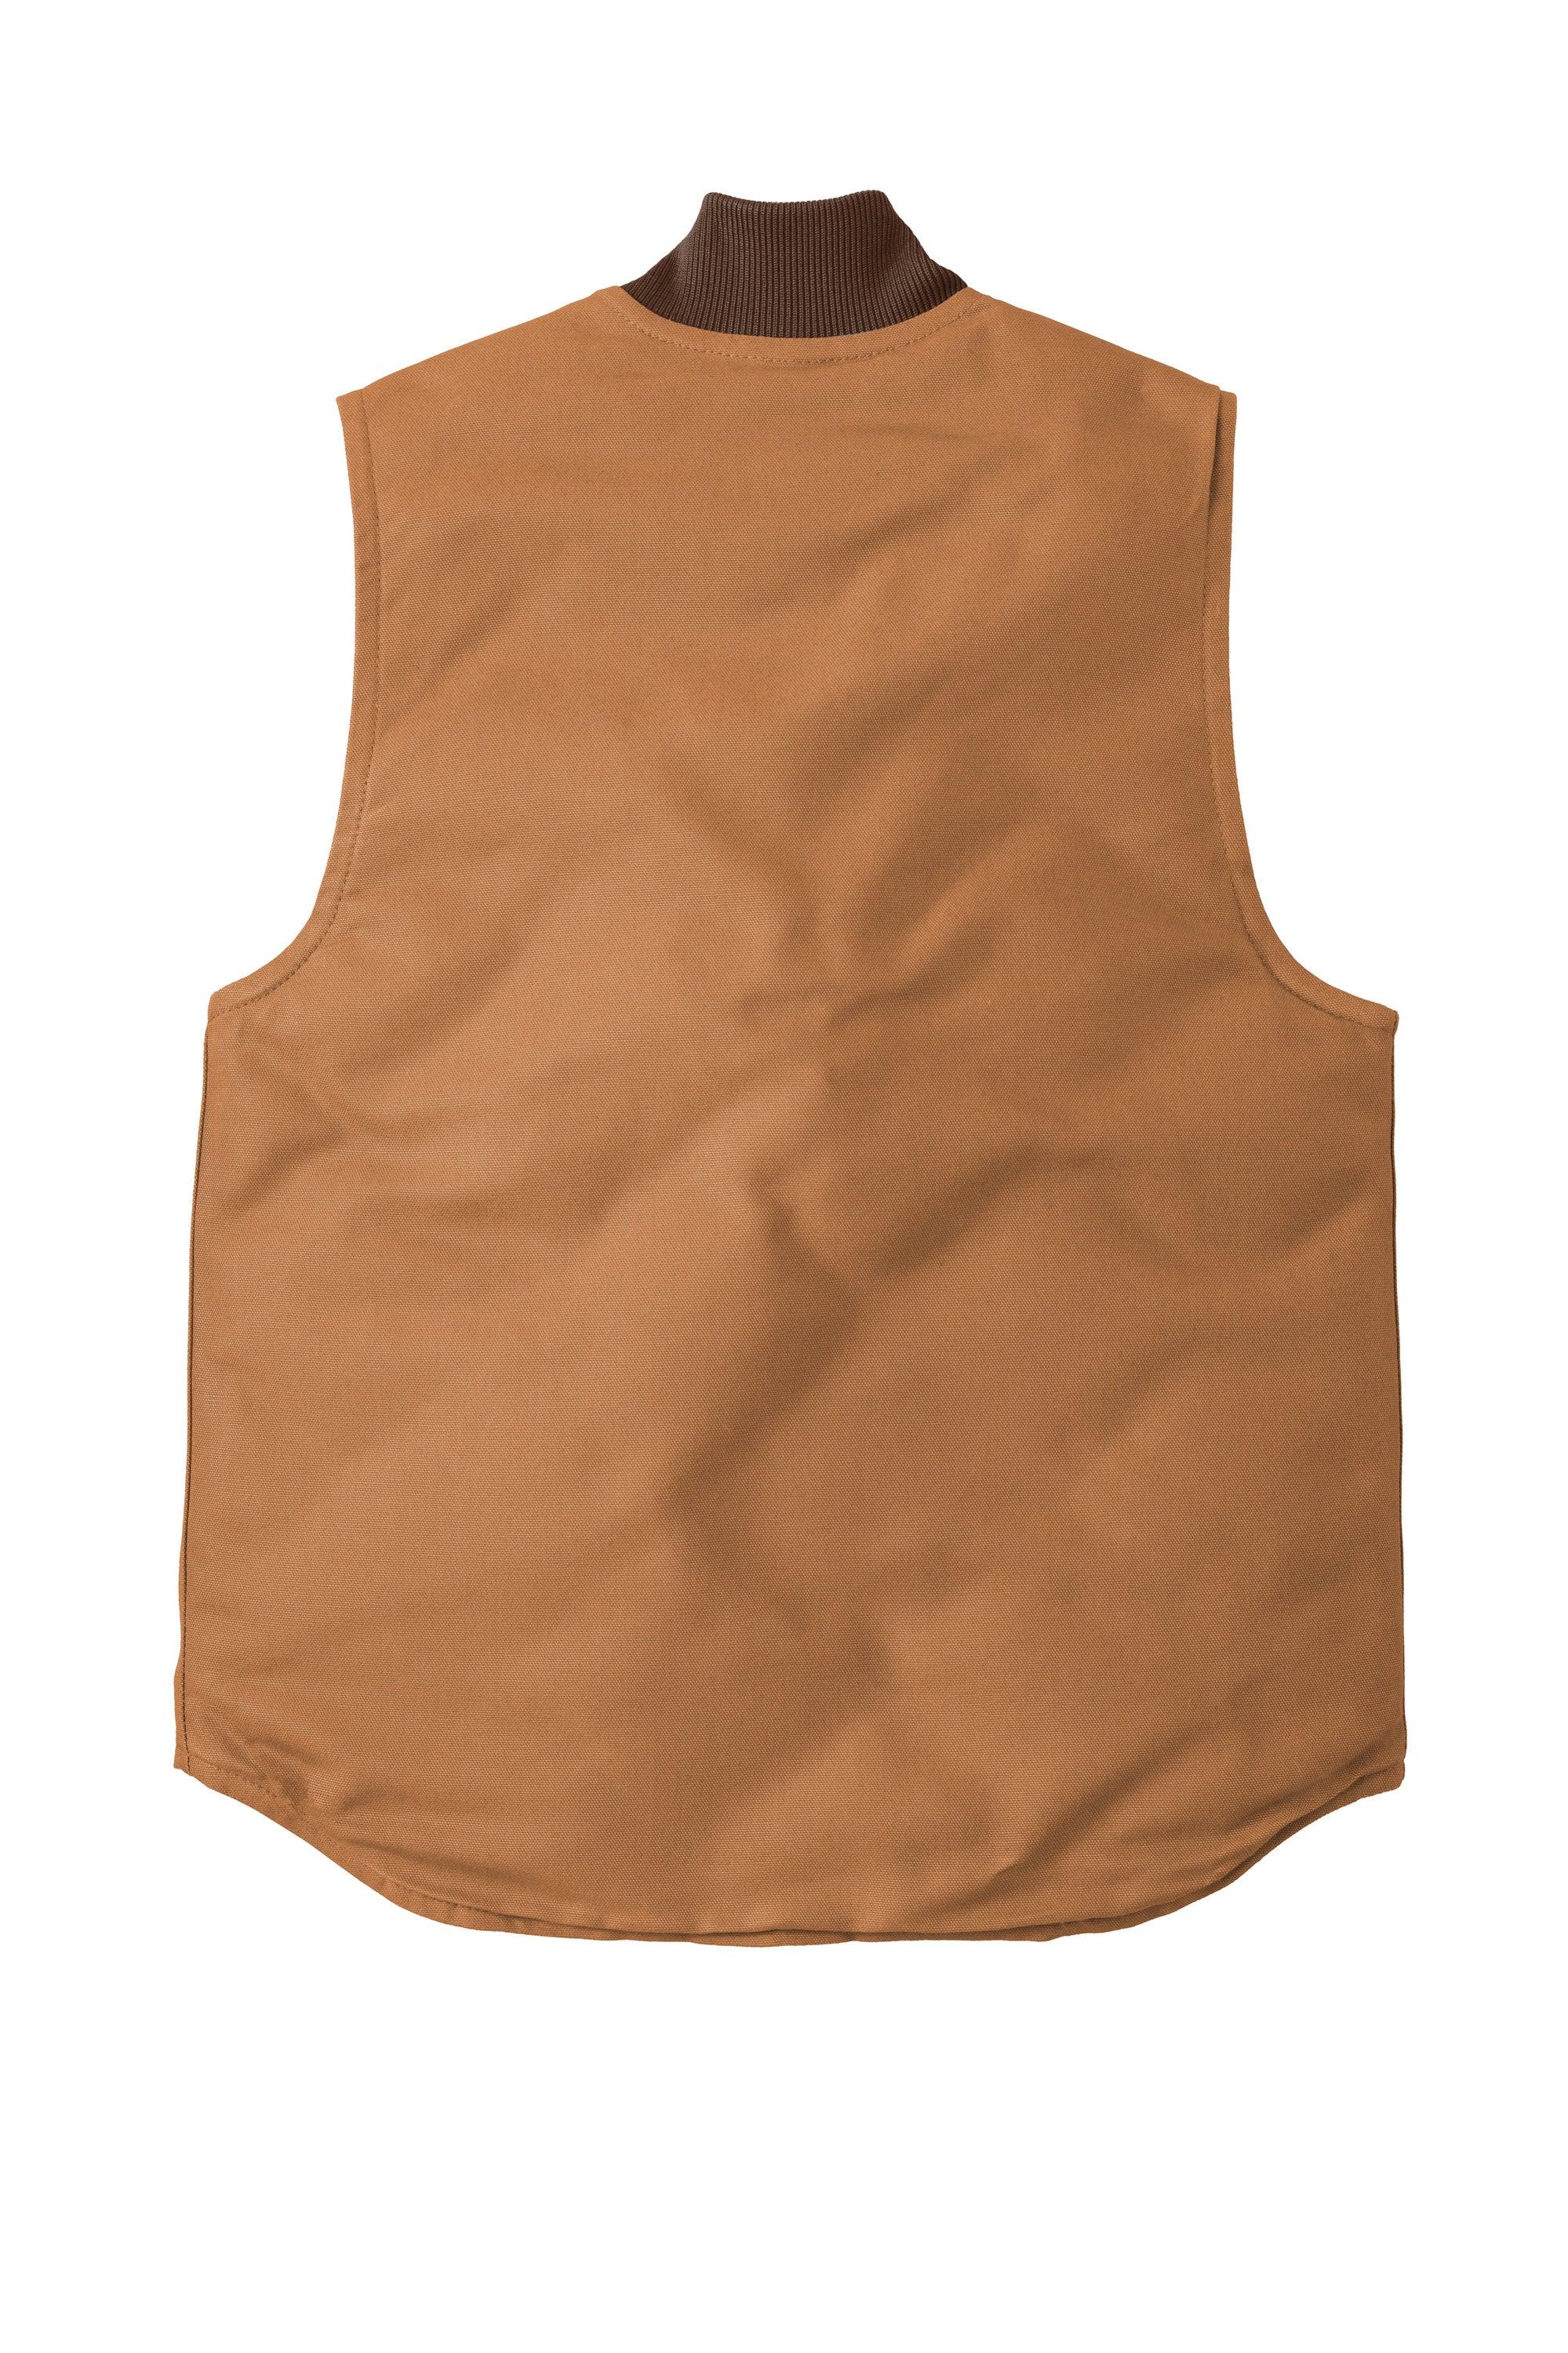 Carhartt Original Duck Vest Customized – Western Skies Design